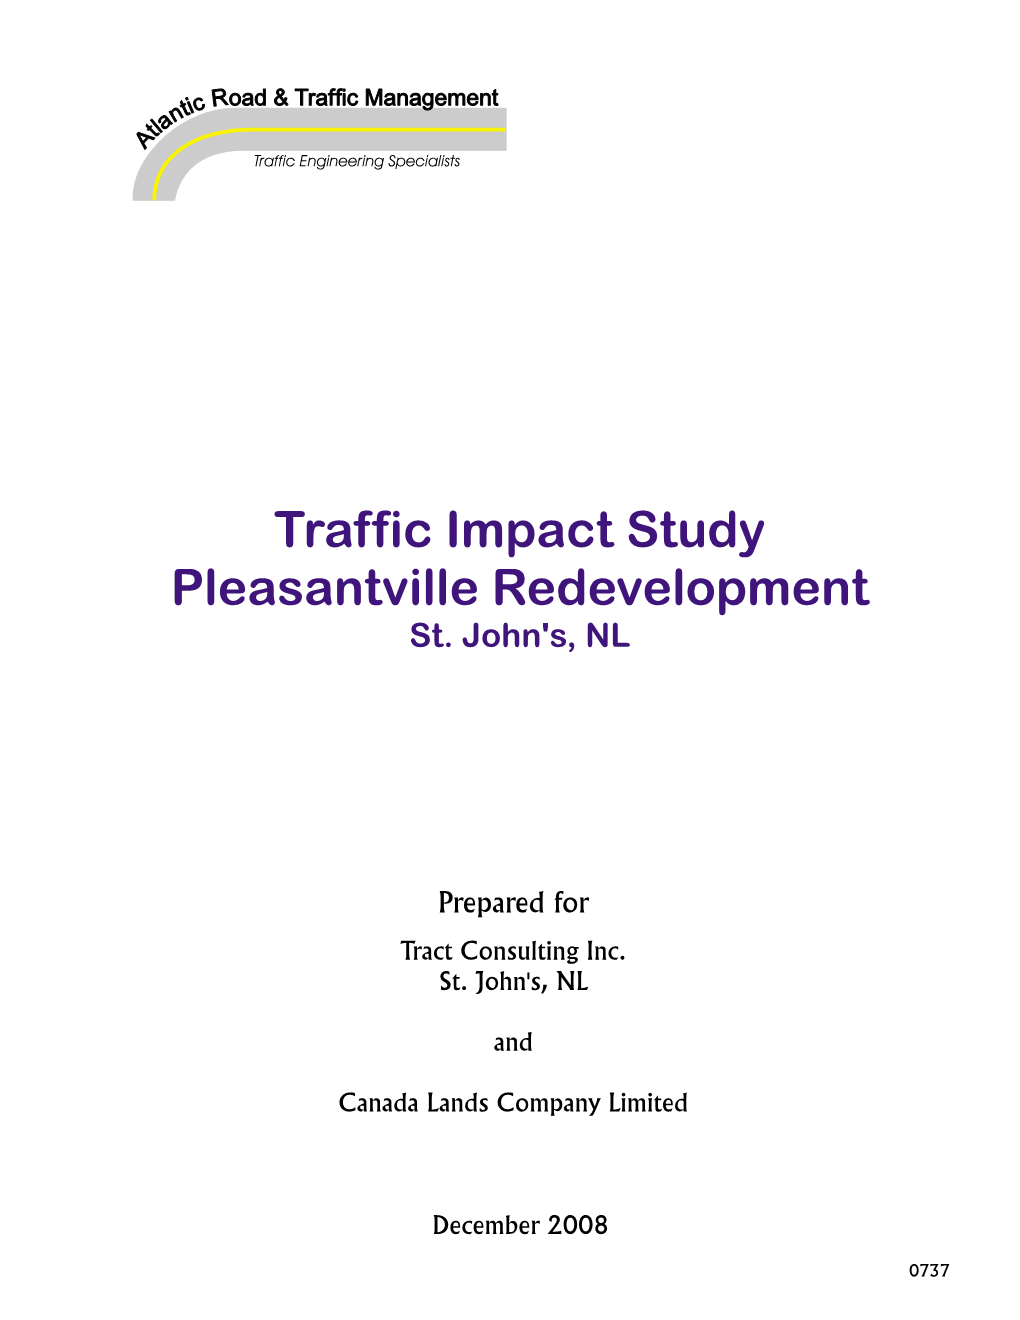 Traffic Impact Study Pleasantville Redevelopment St